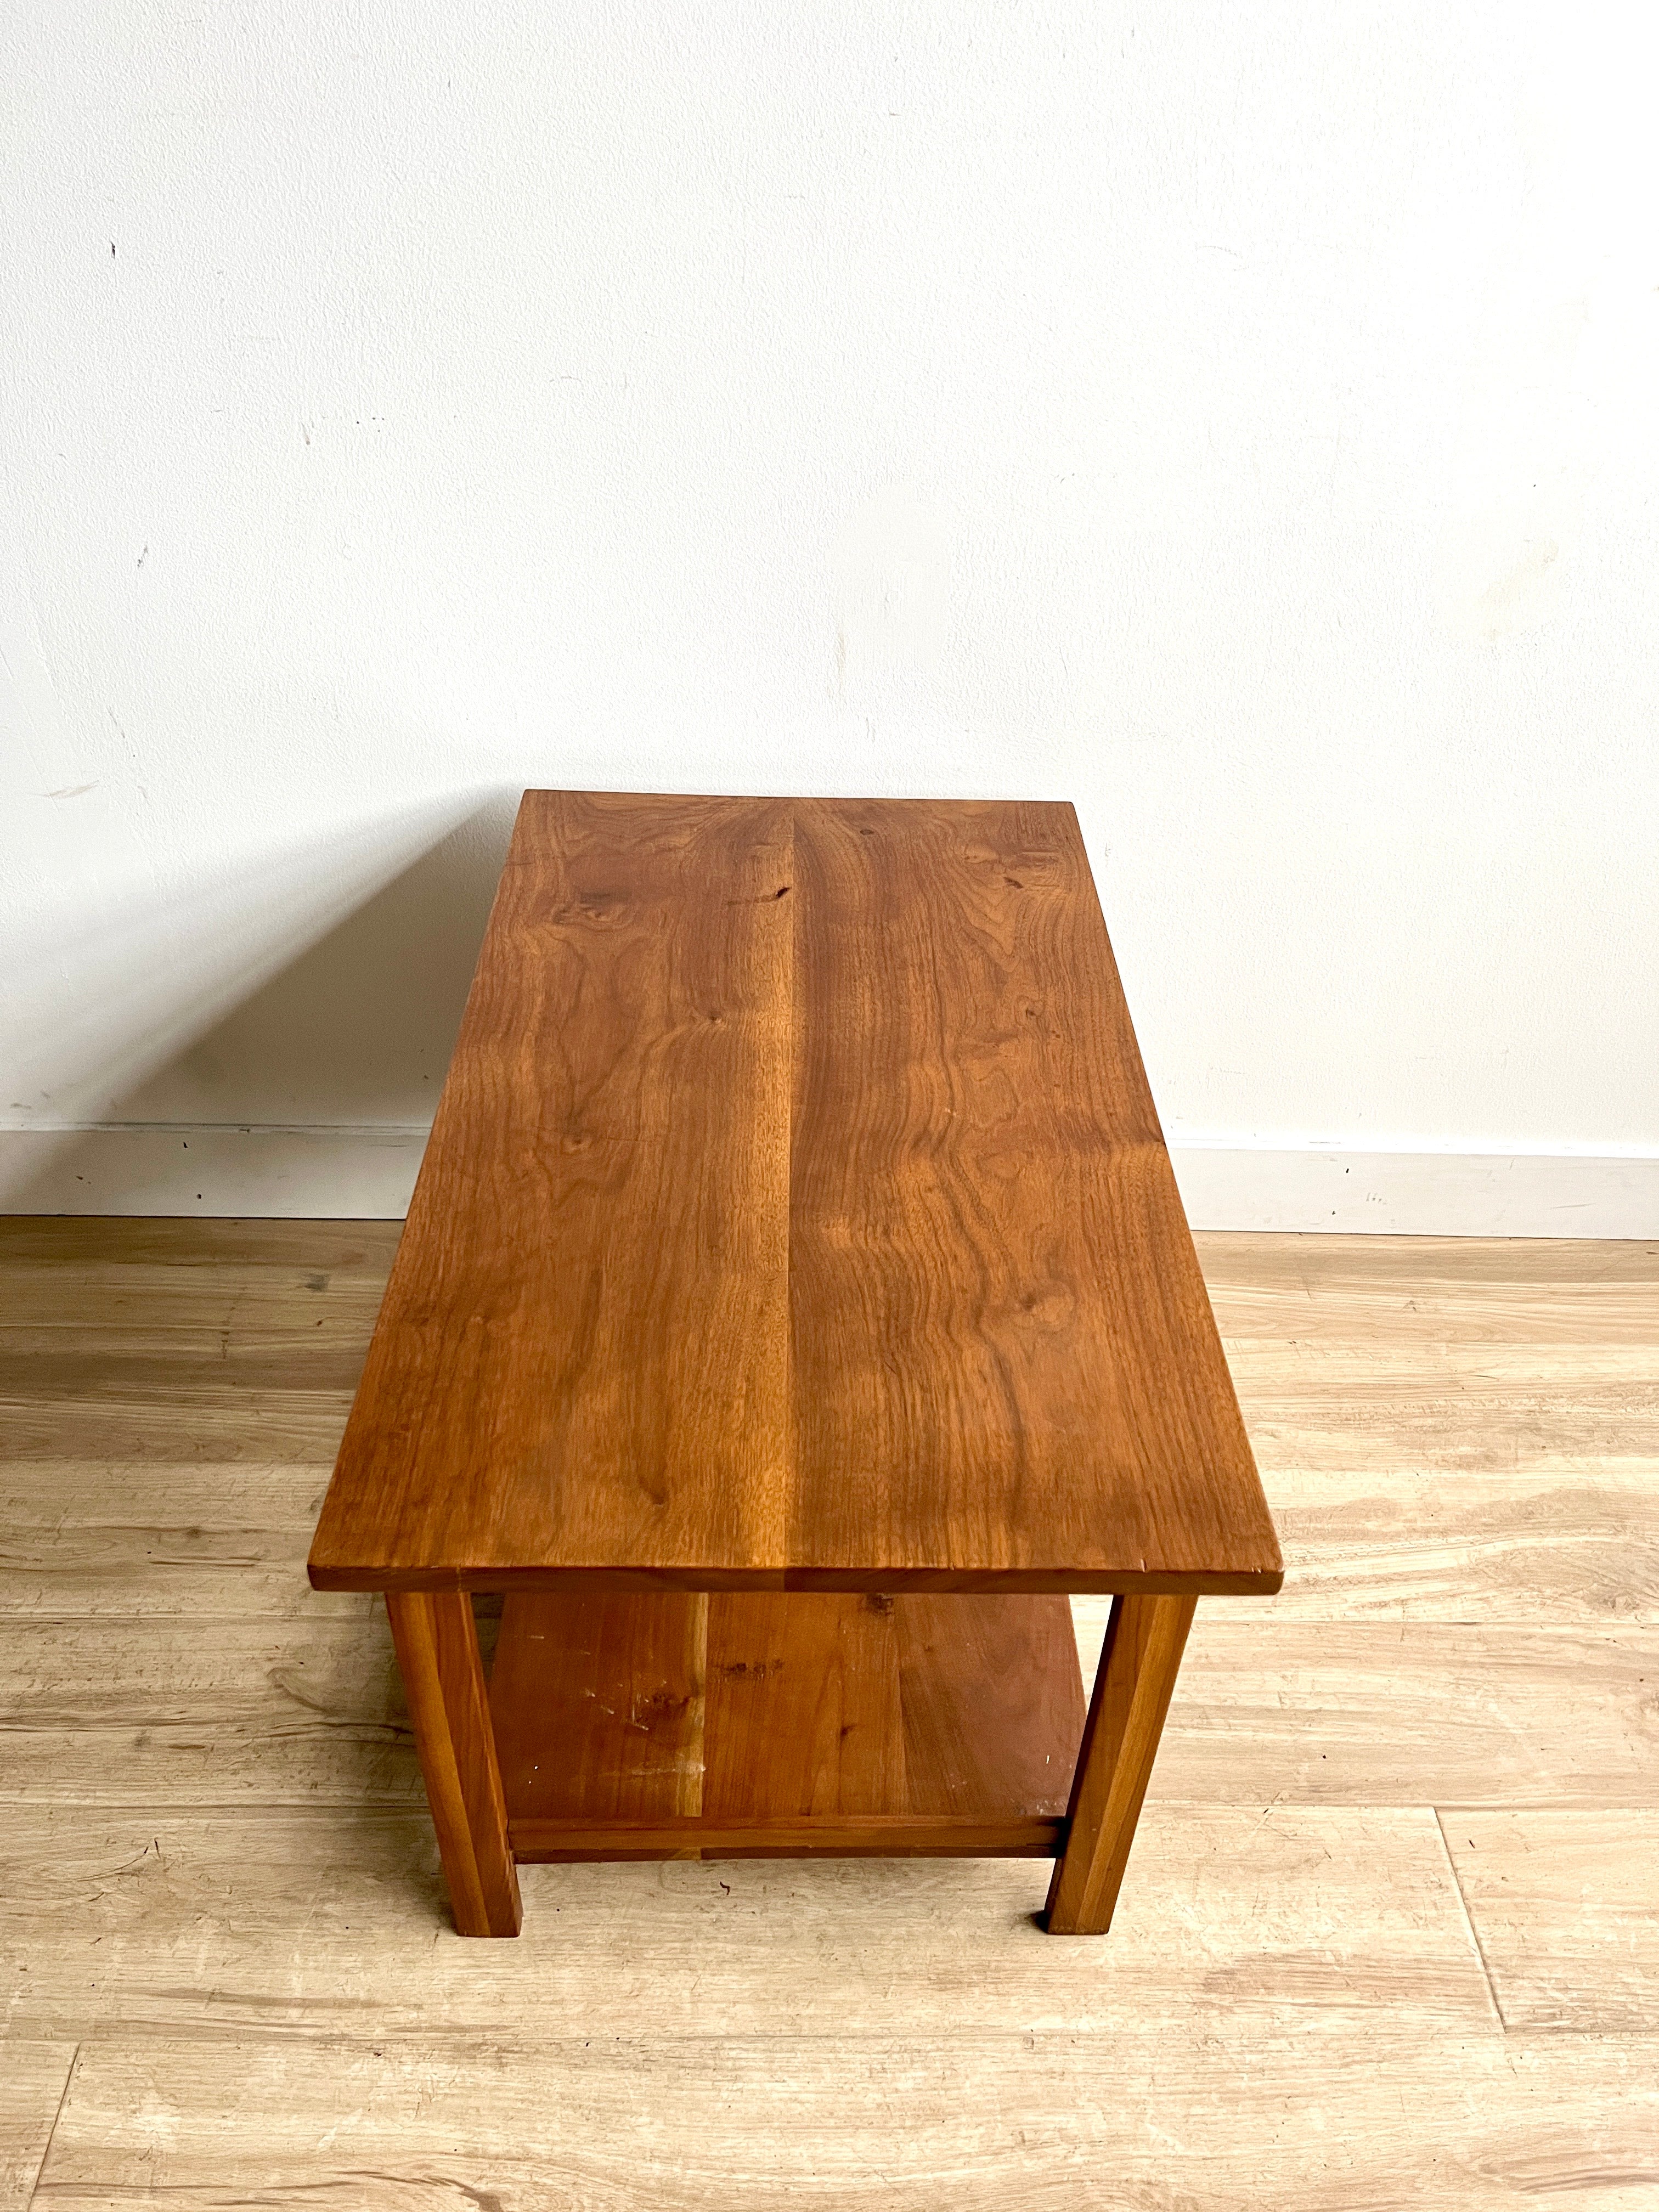 Vintage Mid Century Solid Walnut End table / Nightstand